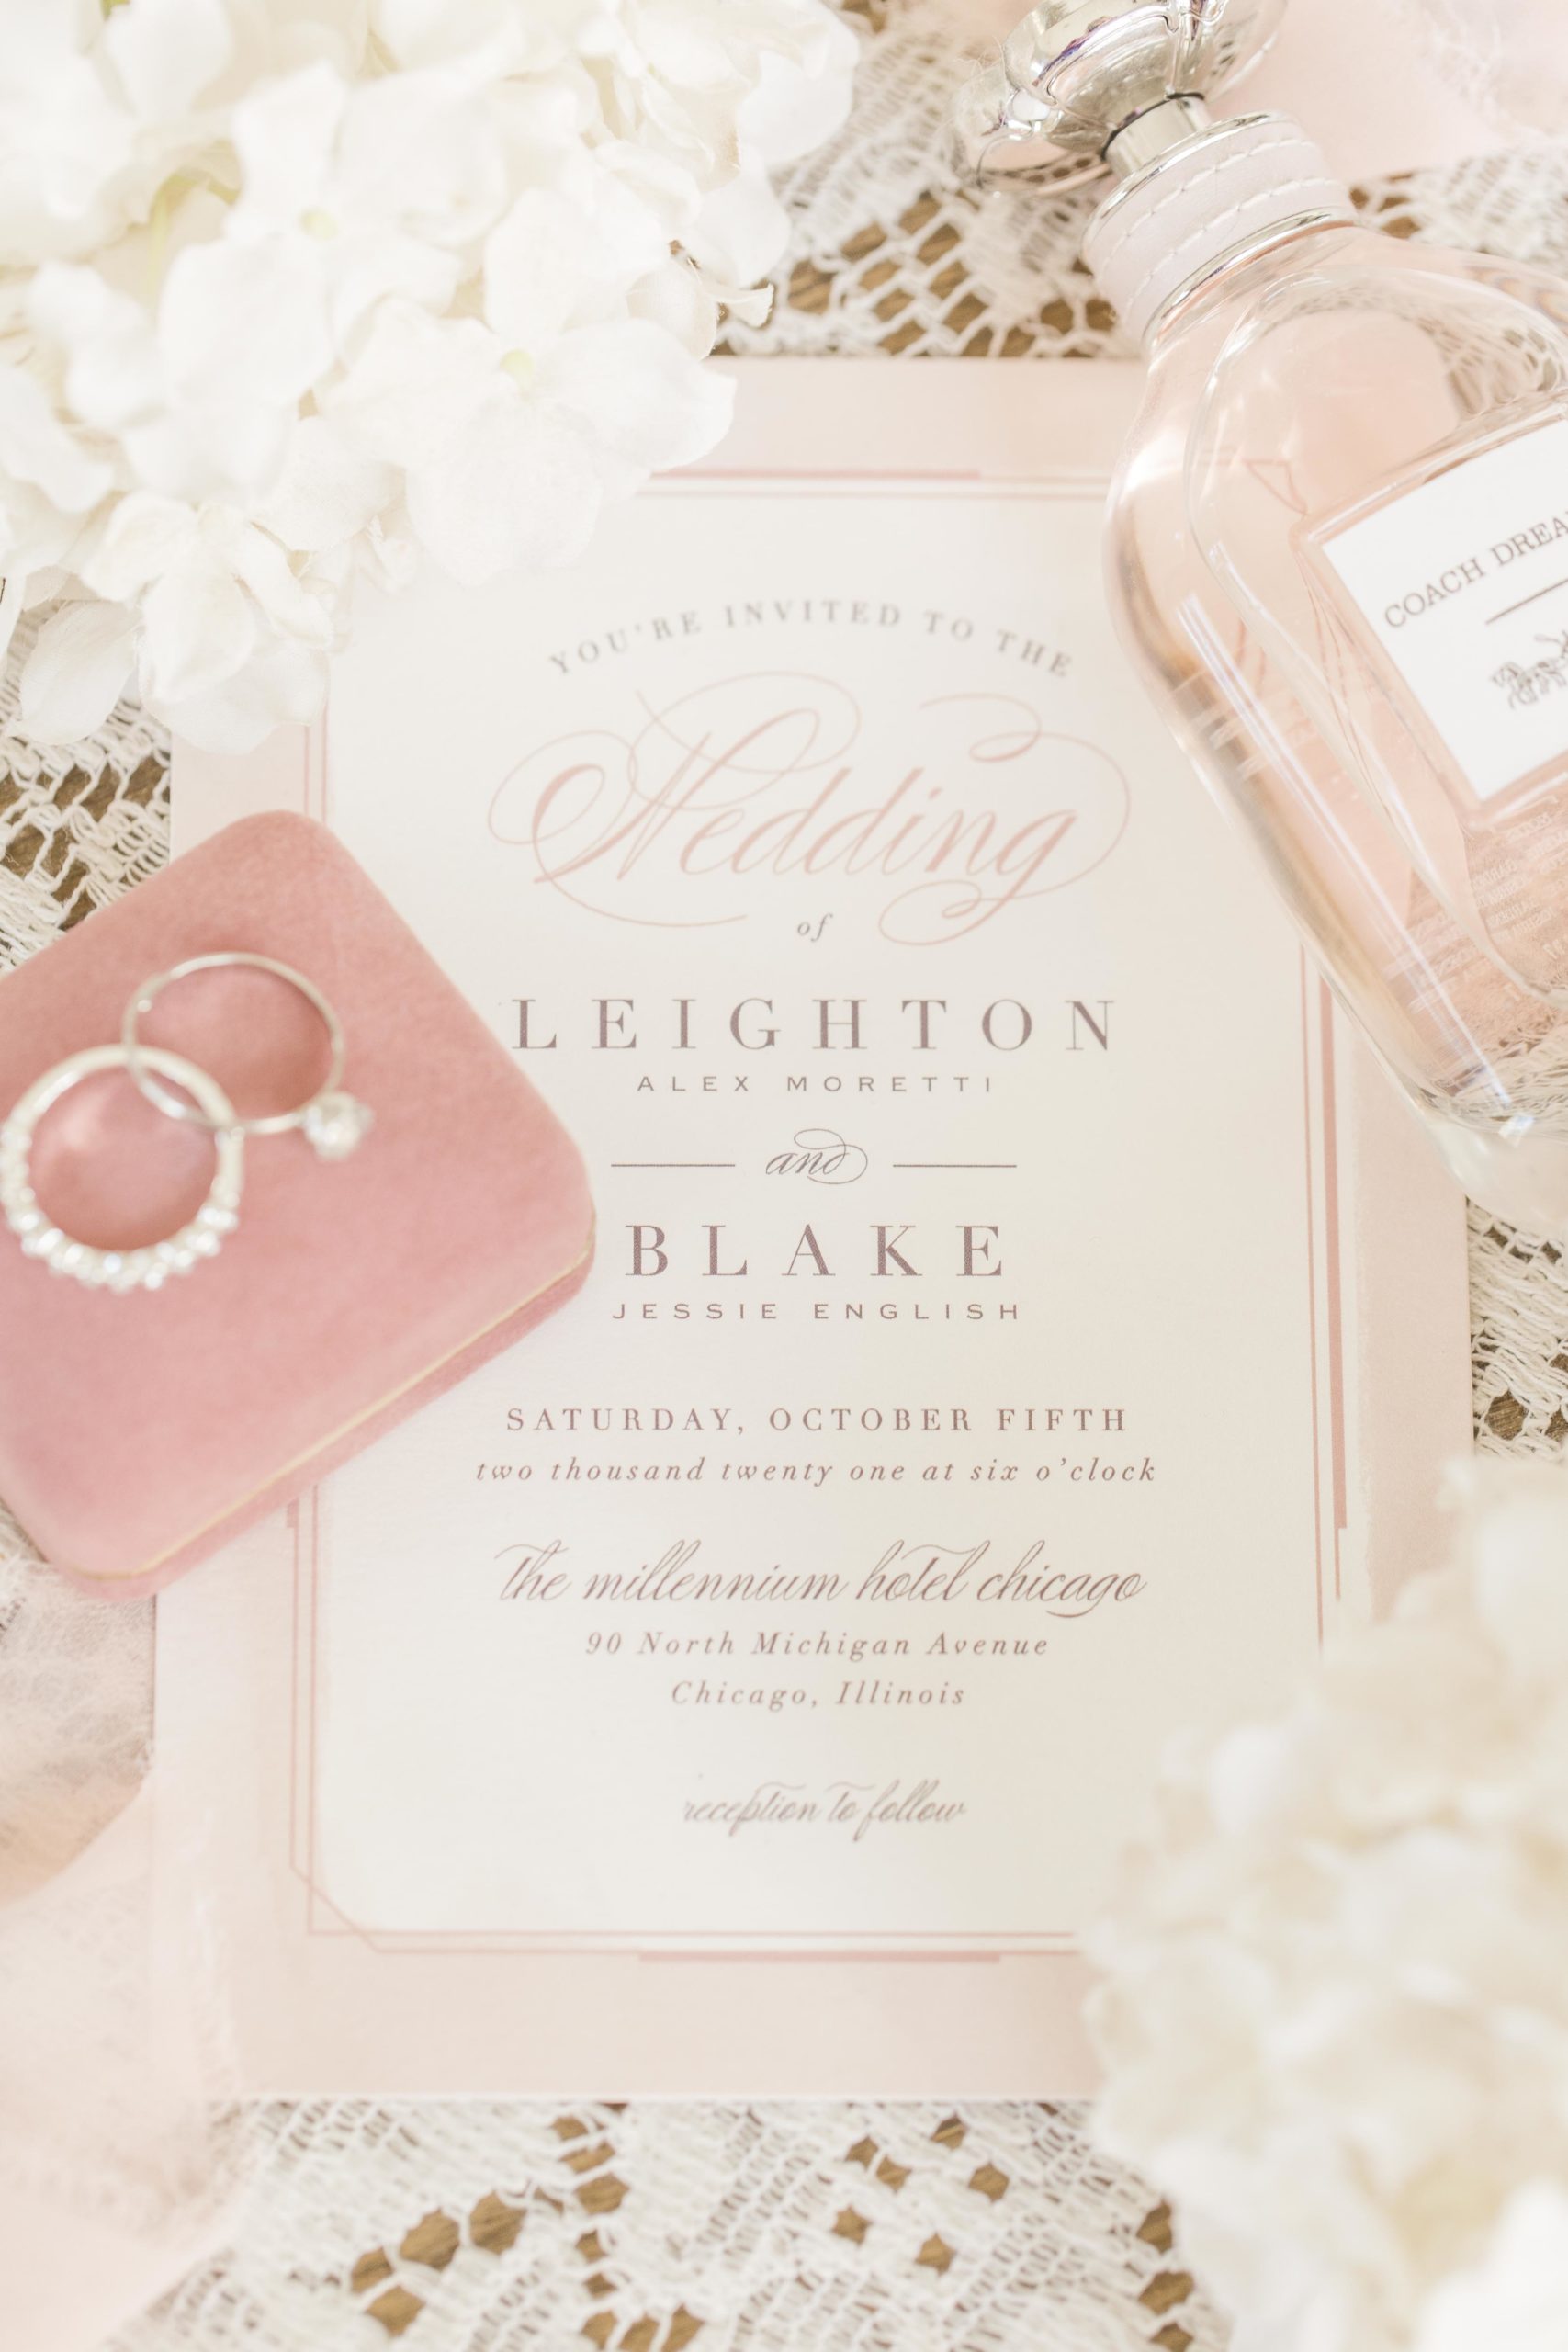 Wedding Invitation on lace